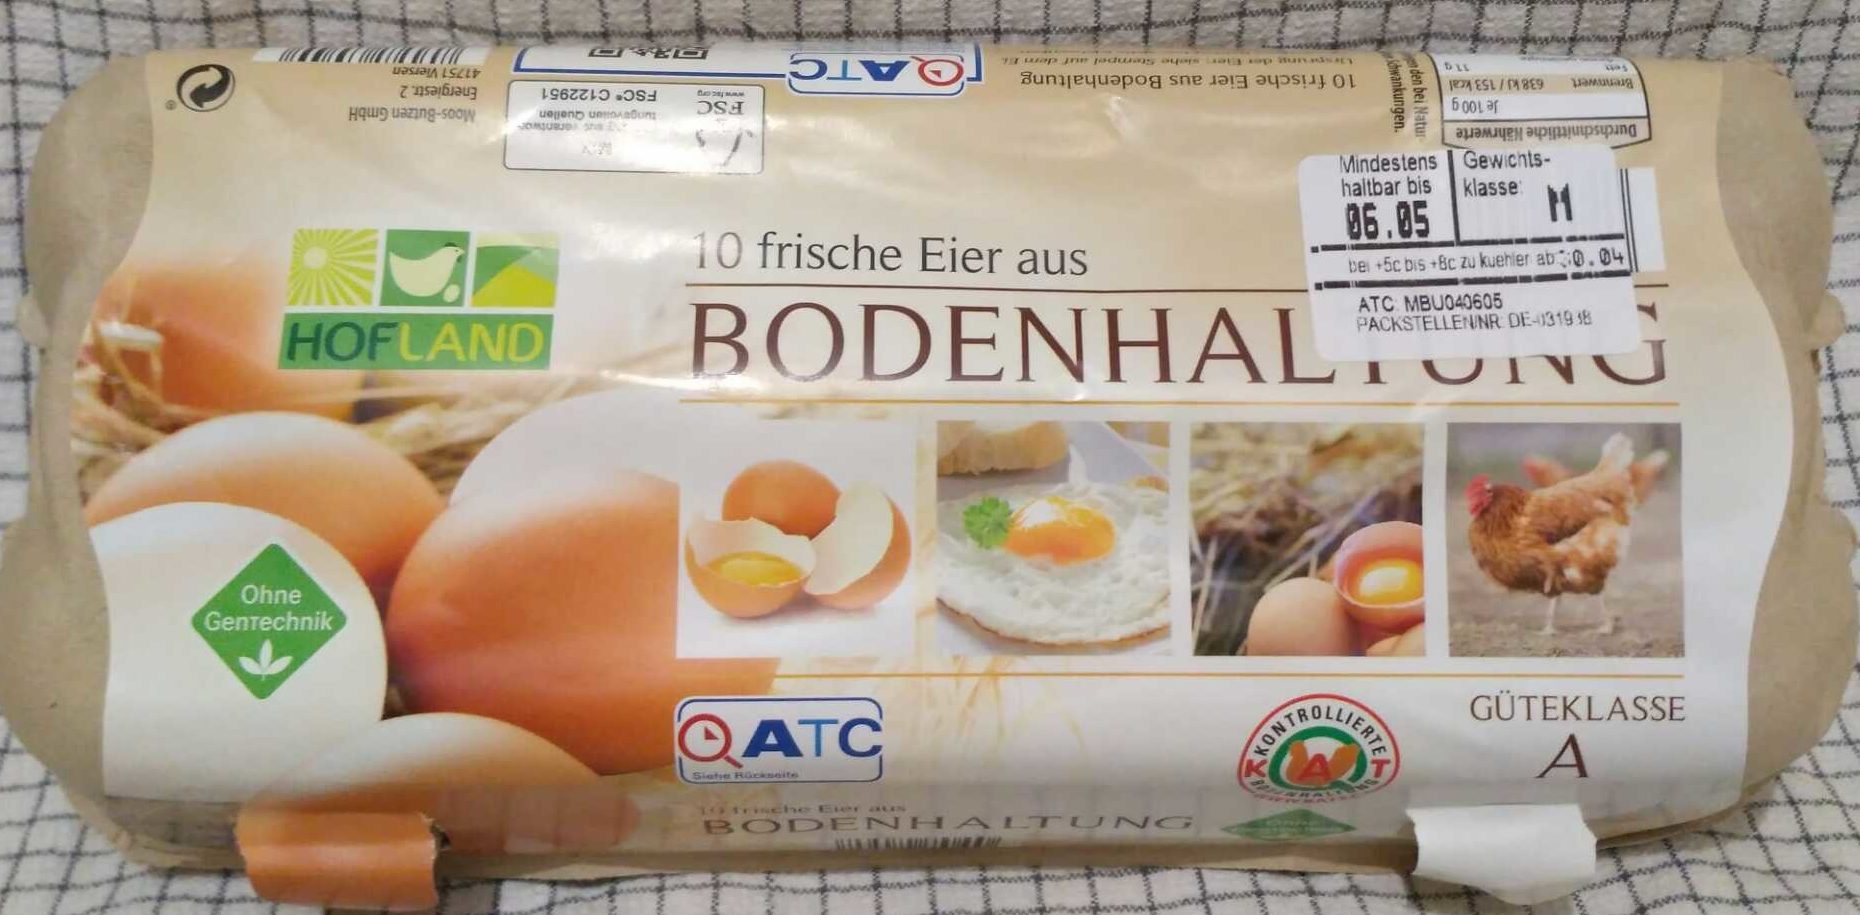 10 frische Eier aus Bodenhaltung - Produkt